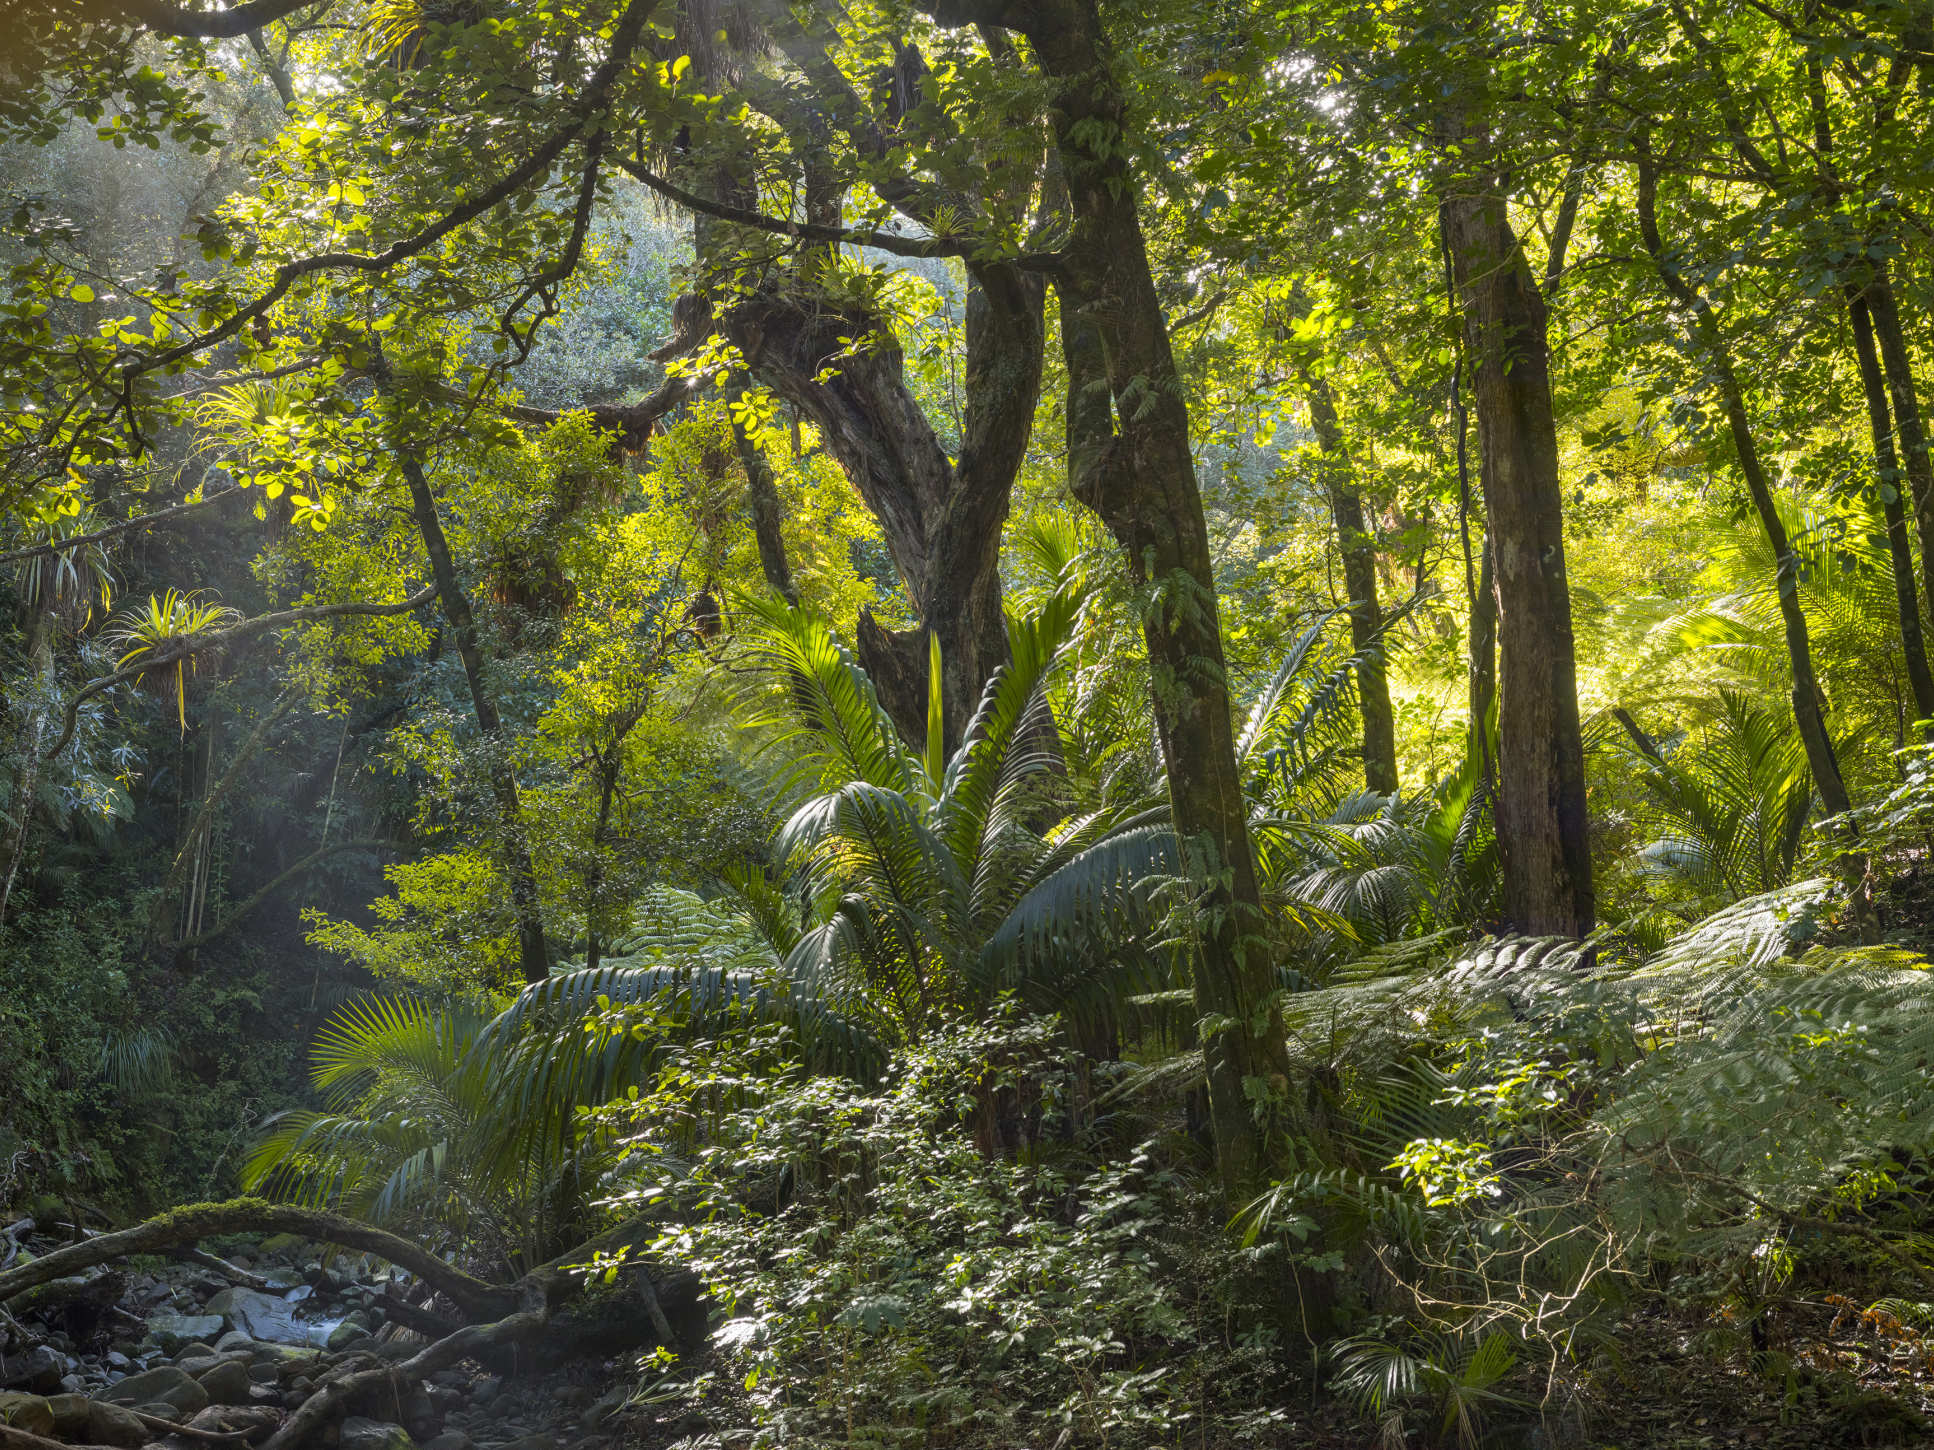 Hihi habitat in New Zealand